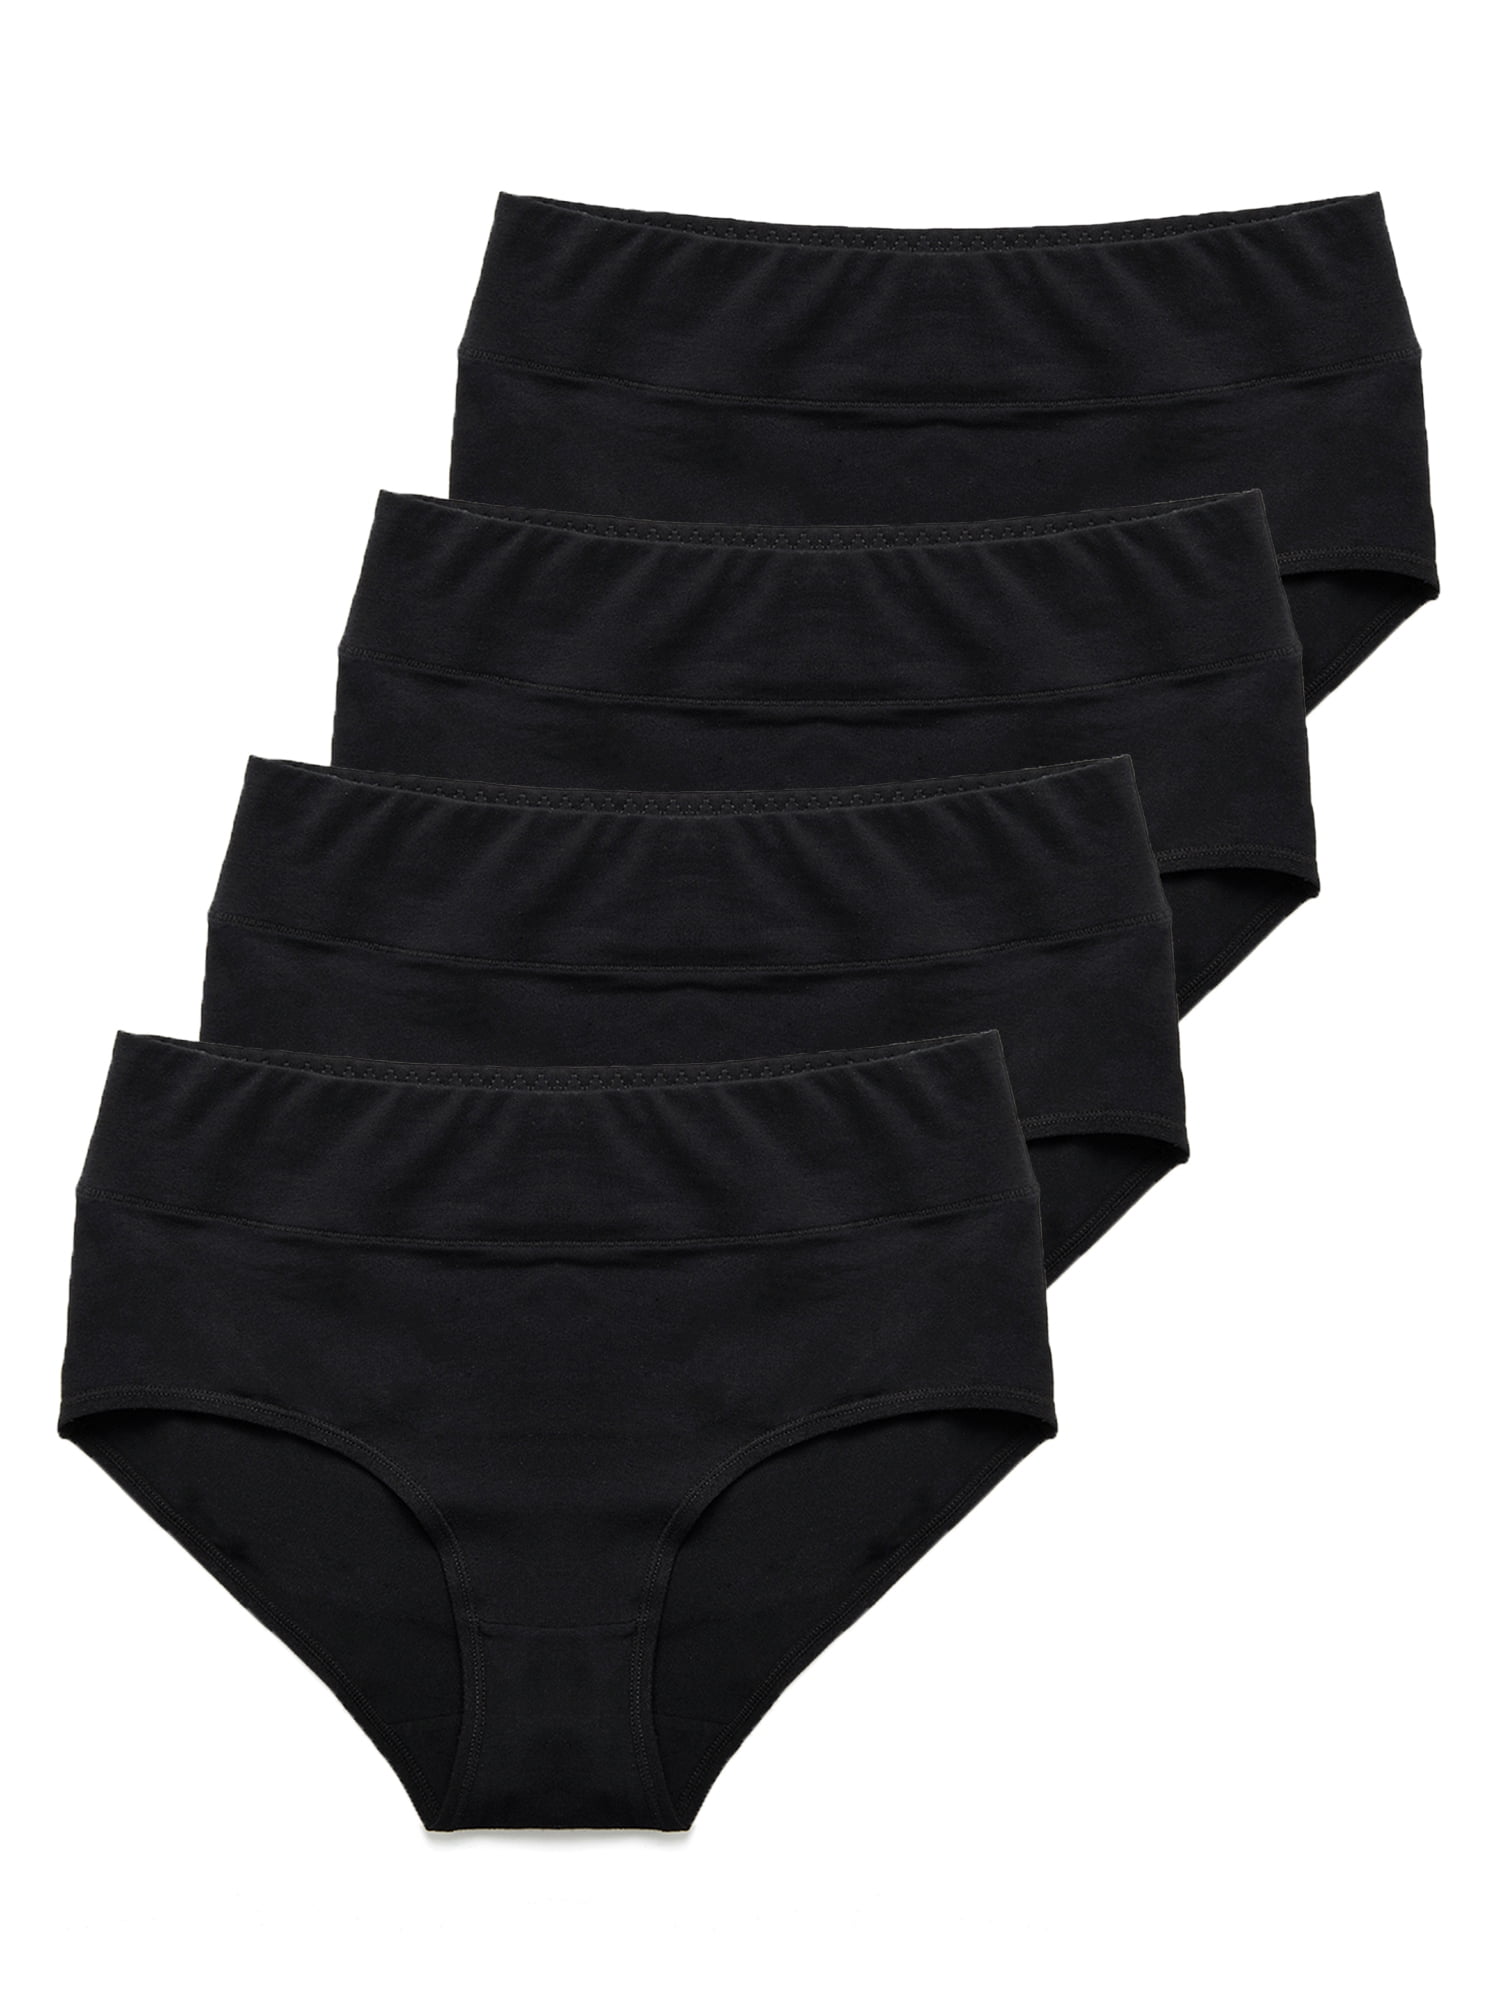 DODOING Women's Plus Size Tummy Control Panties Briefs 1-4 Pack, Soft ...